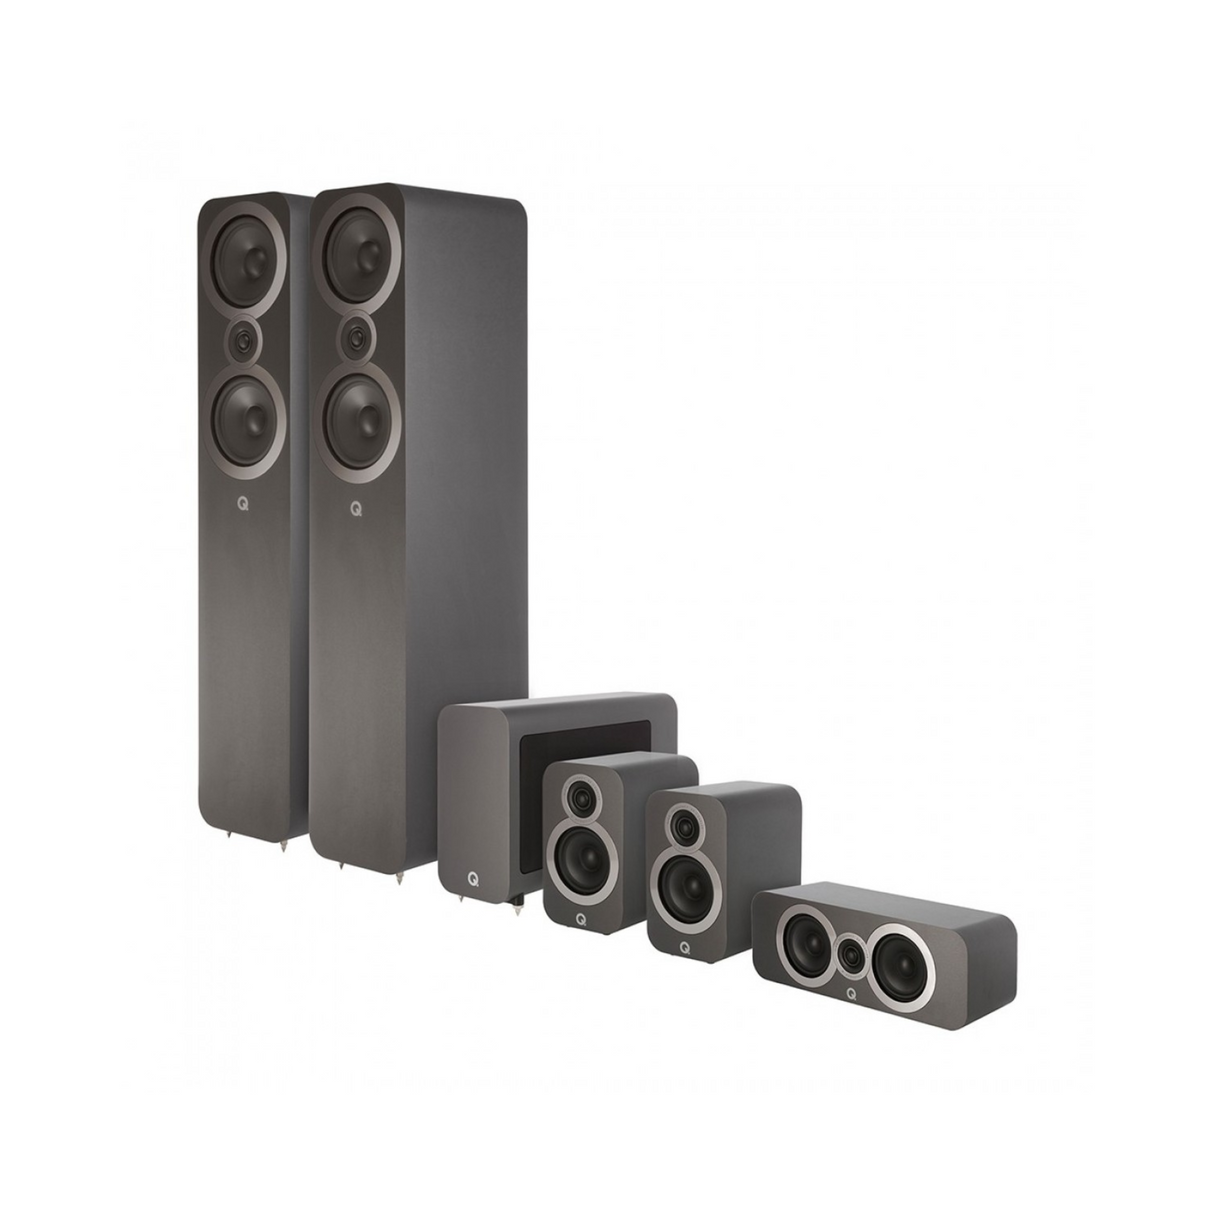 Q Acoustics 3050i 5.1 Channel Speaker Package